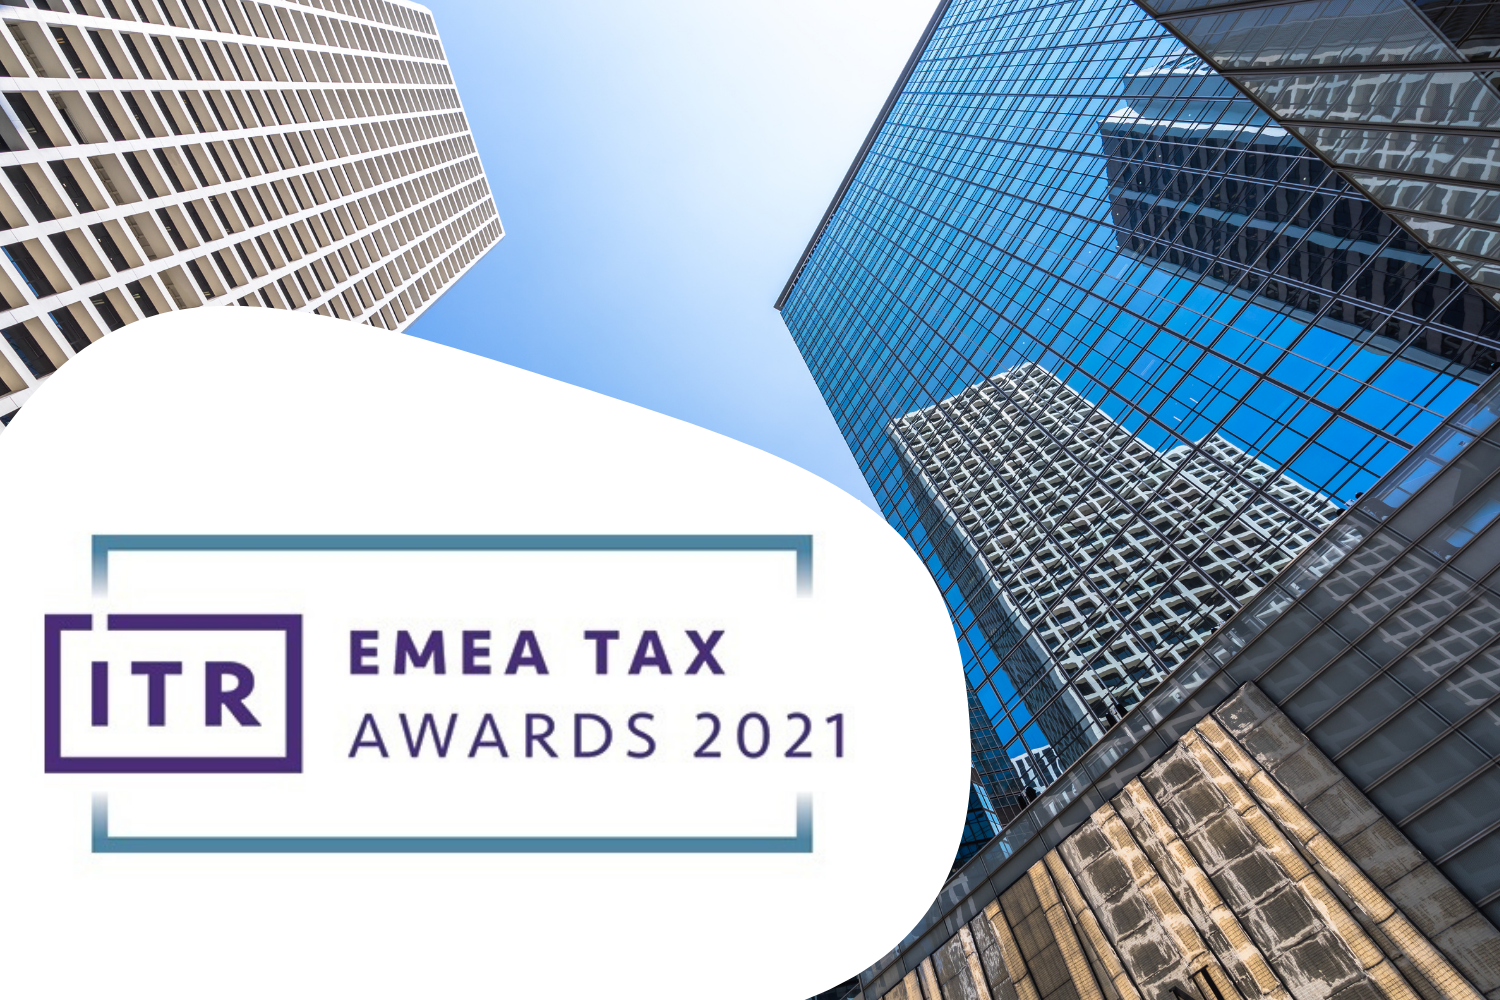 ITR EMEA Tax Awards 2021: Martha Papasotiriou nominated as Indirect Tax Leader of the year